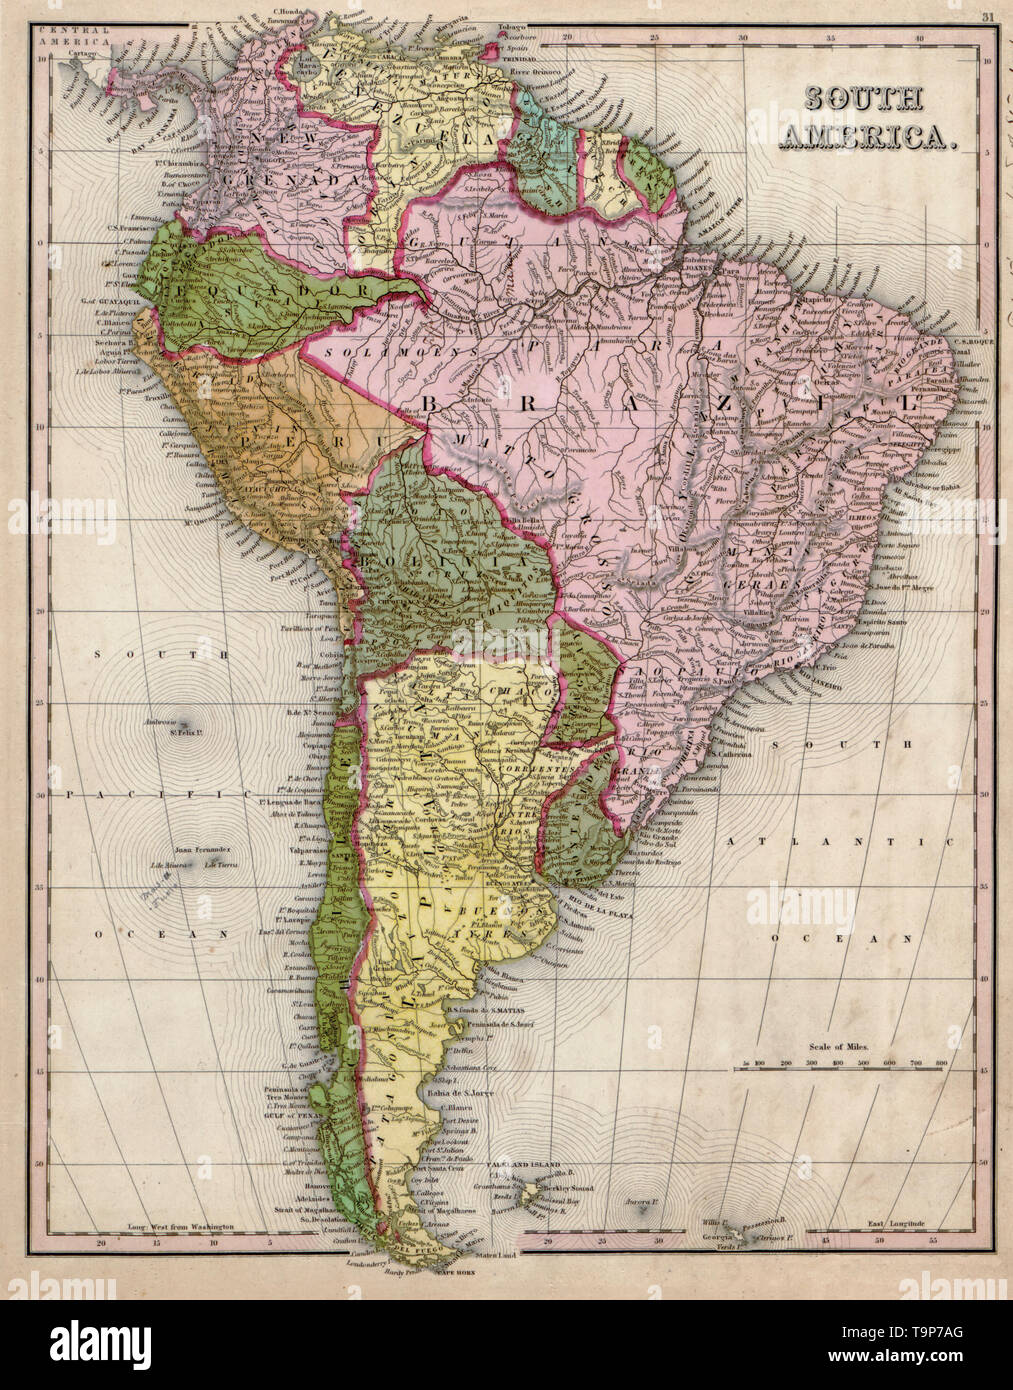 Karte von Südamerika, 1844 Stockfoto